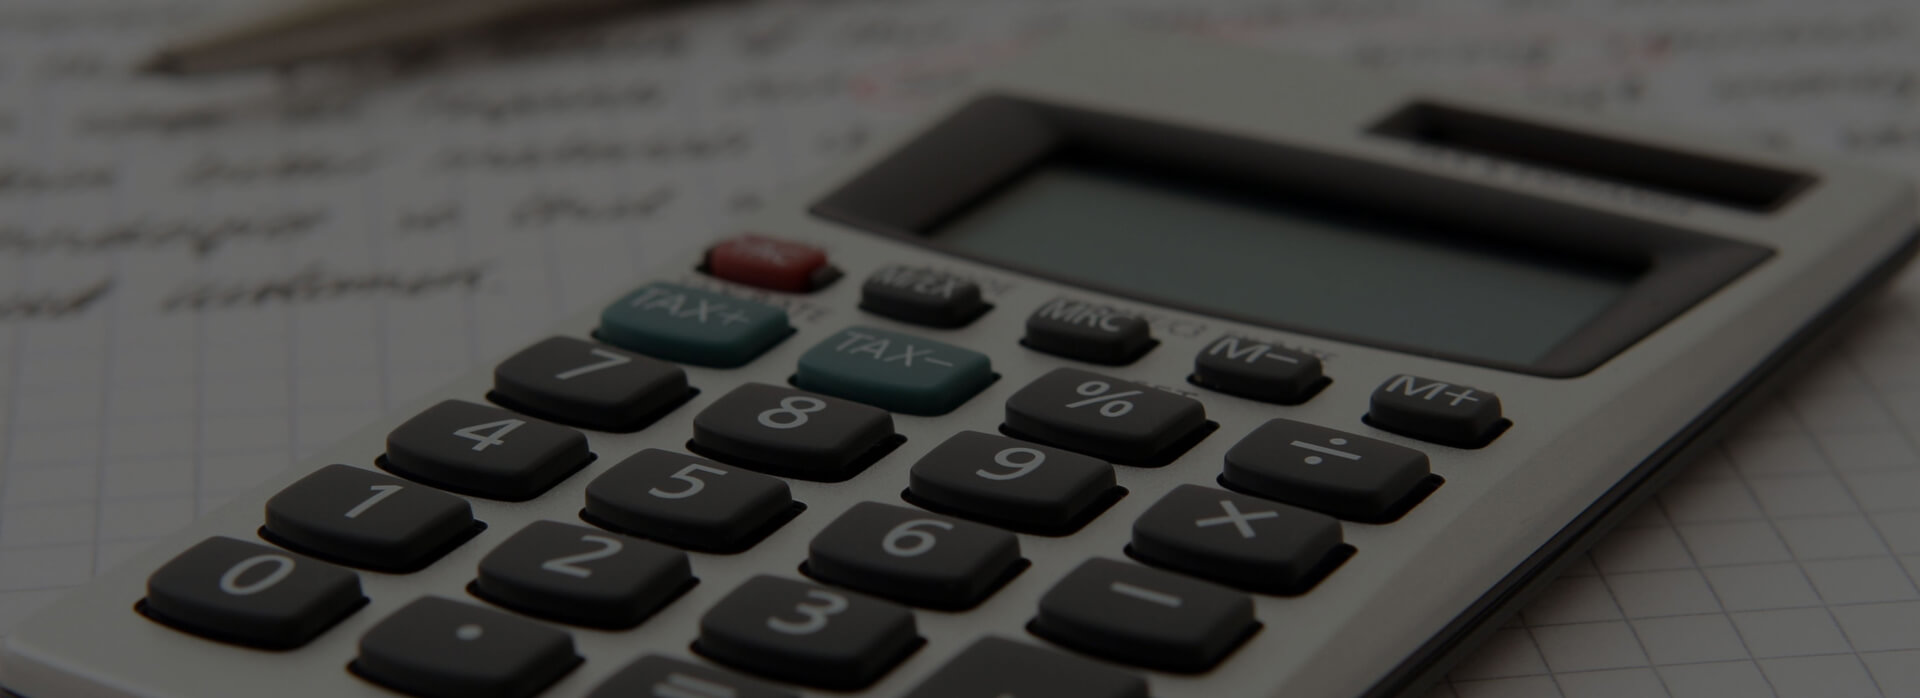 Australian Tax Refund Calculator Get Your Estimate Now 